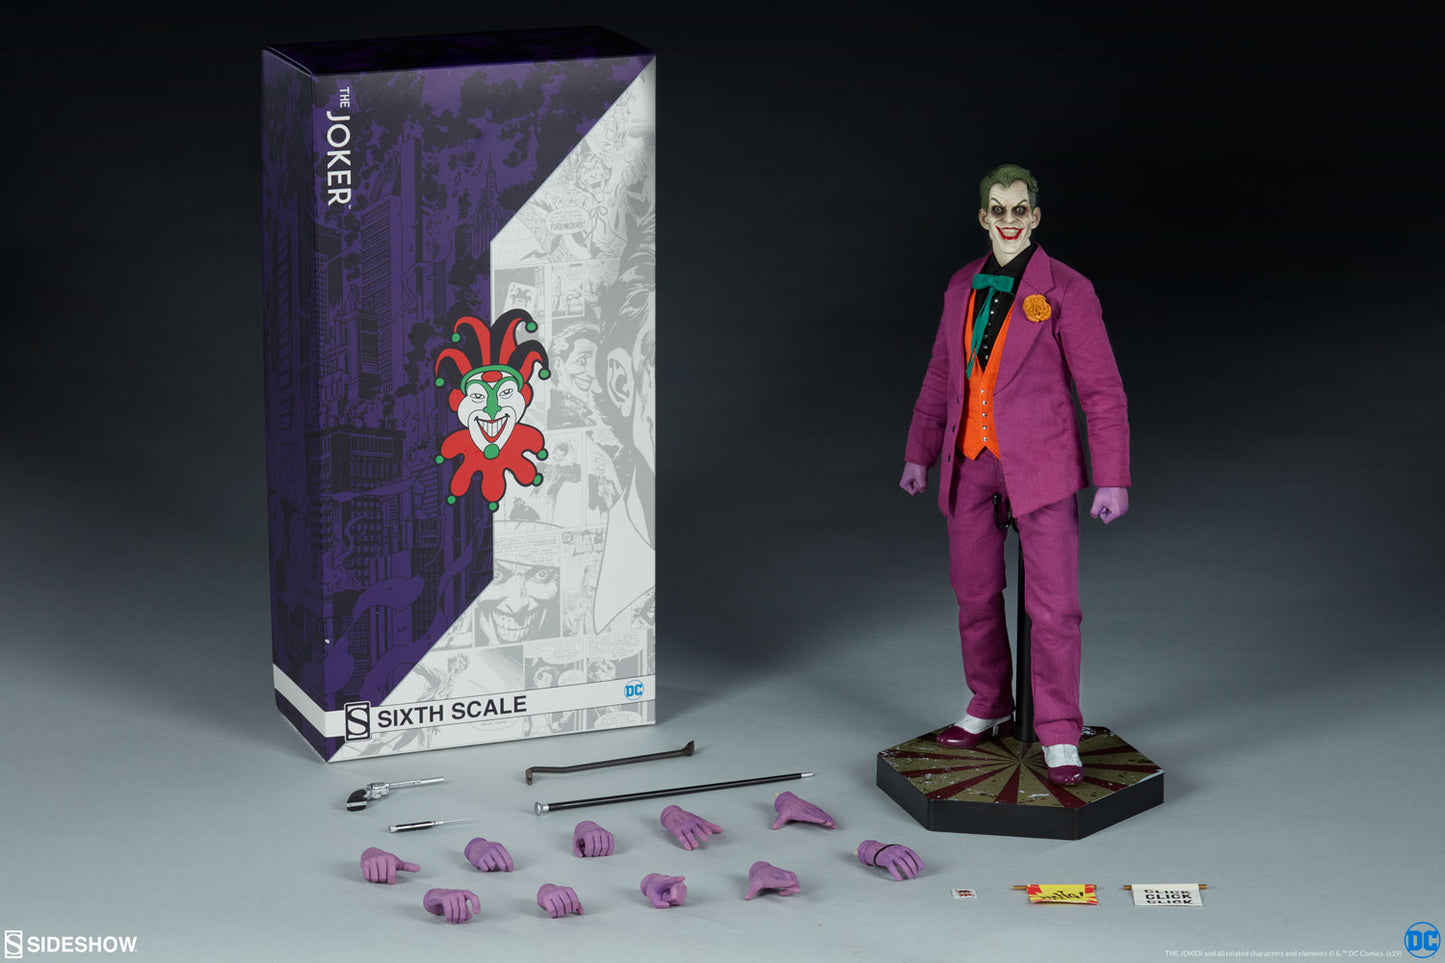 The Joker Exclusive 1/6 - DC Comics Sideshow